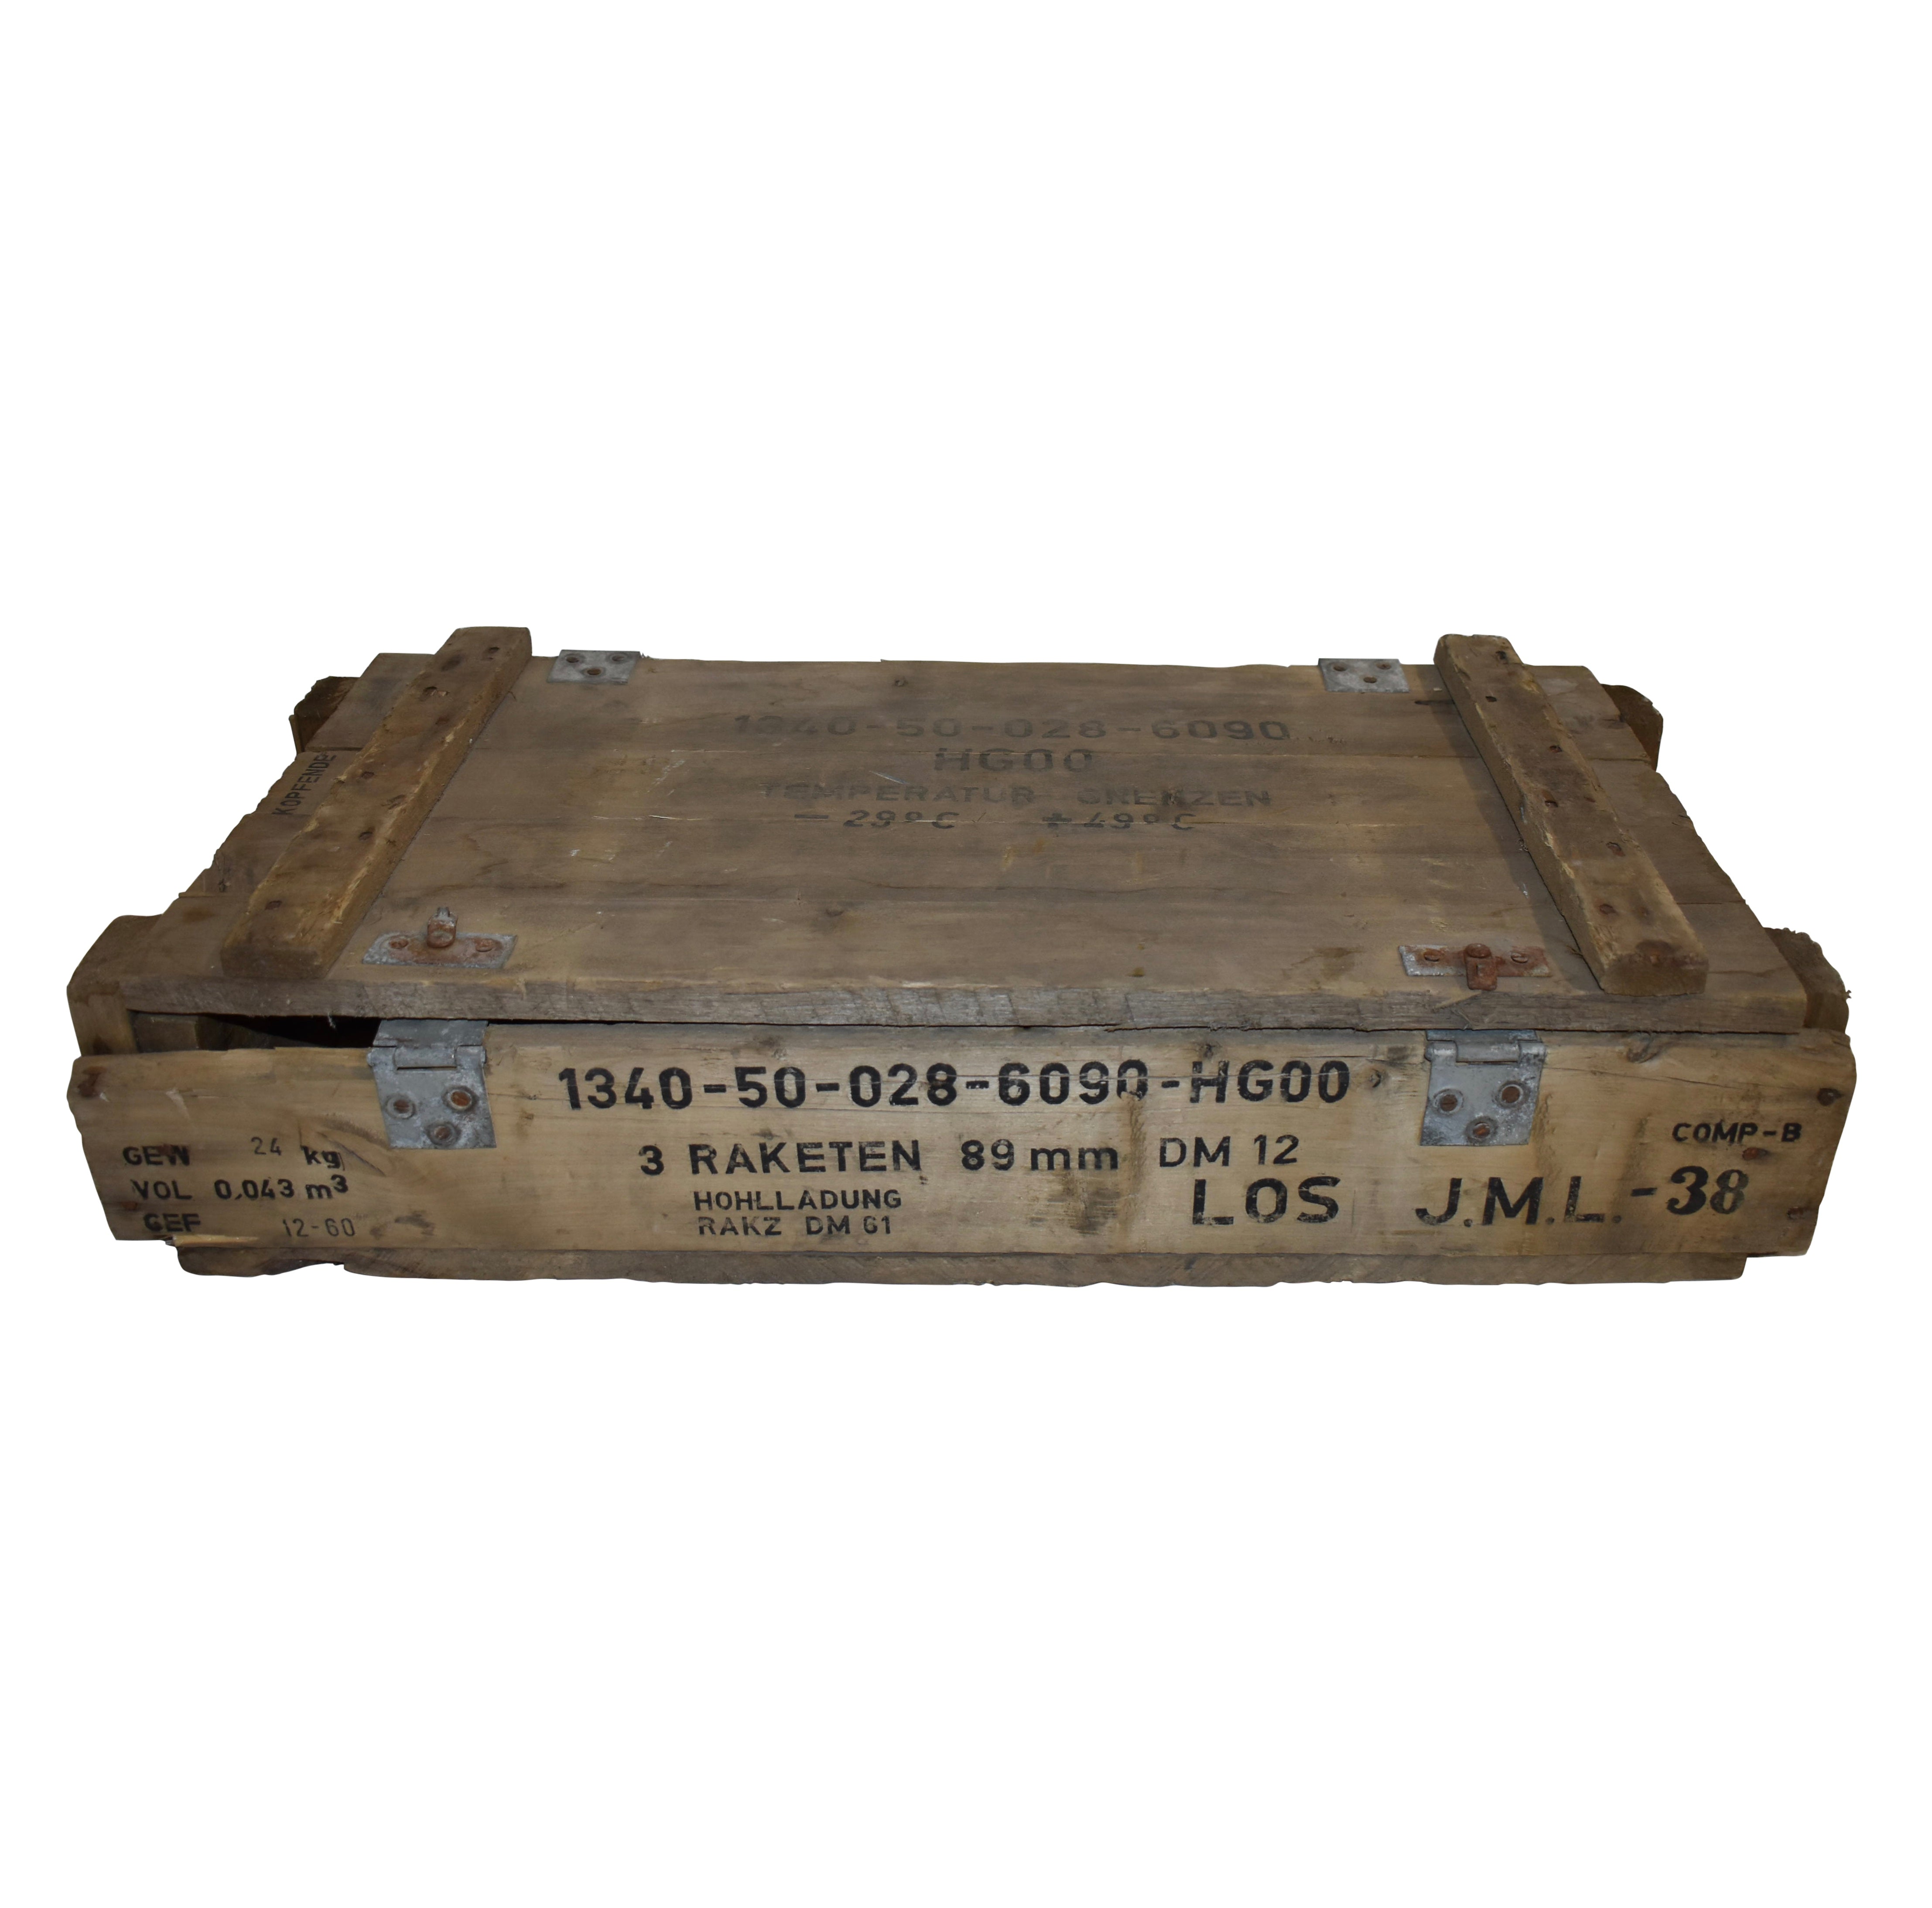 German Ammunition Box